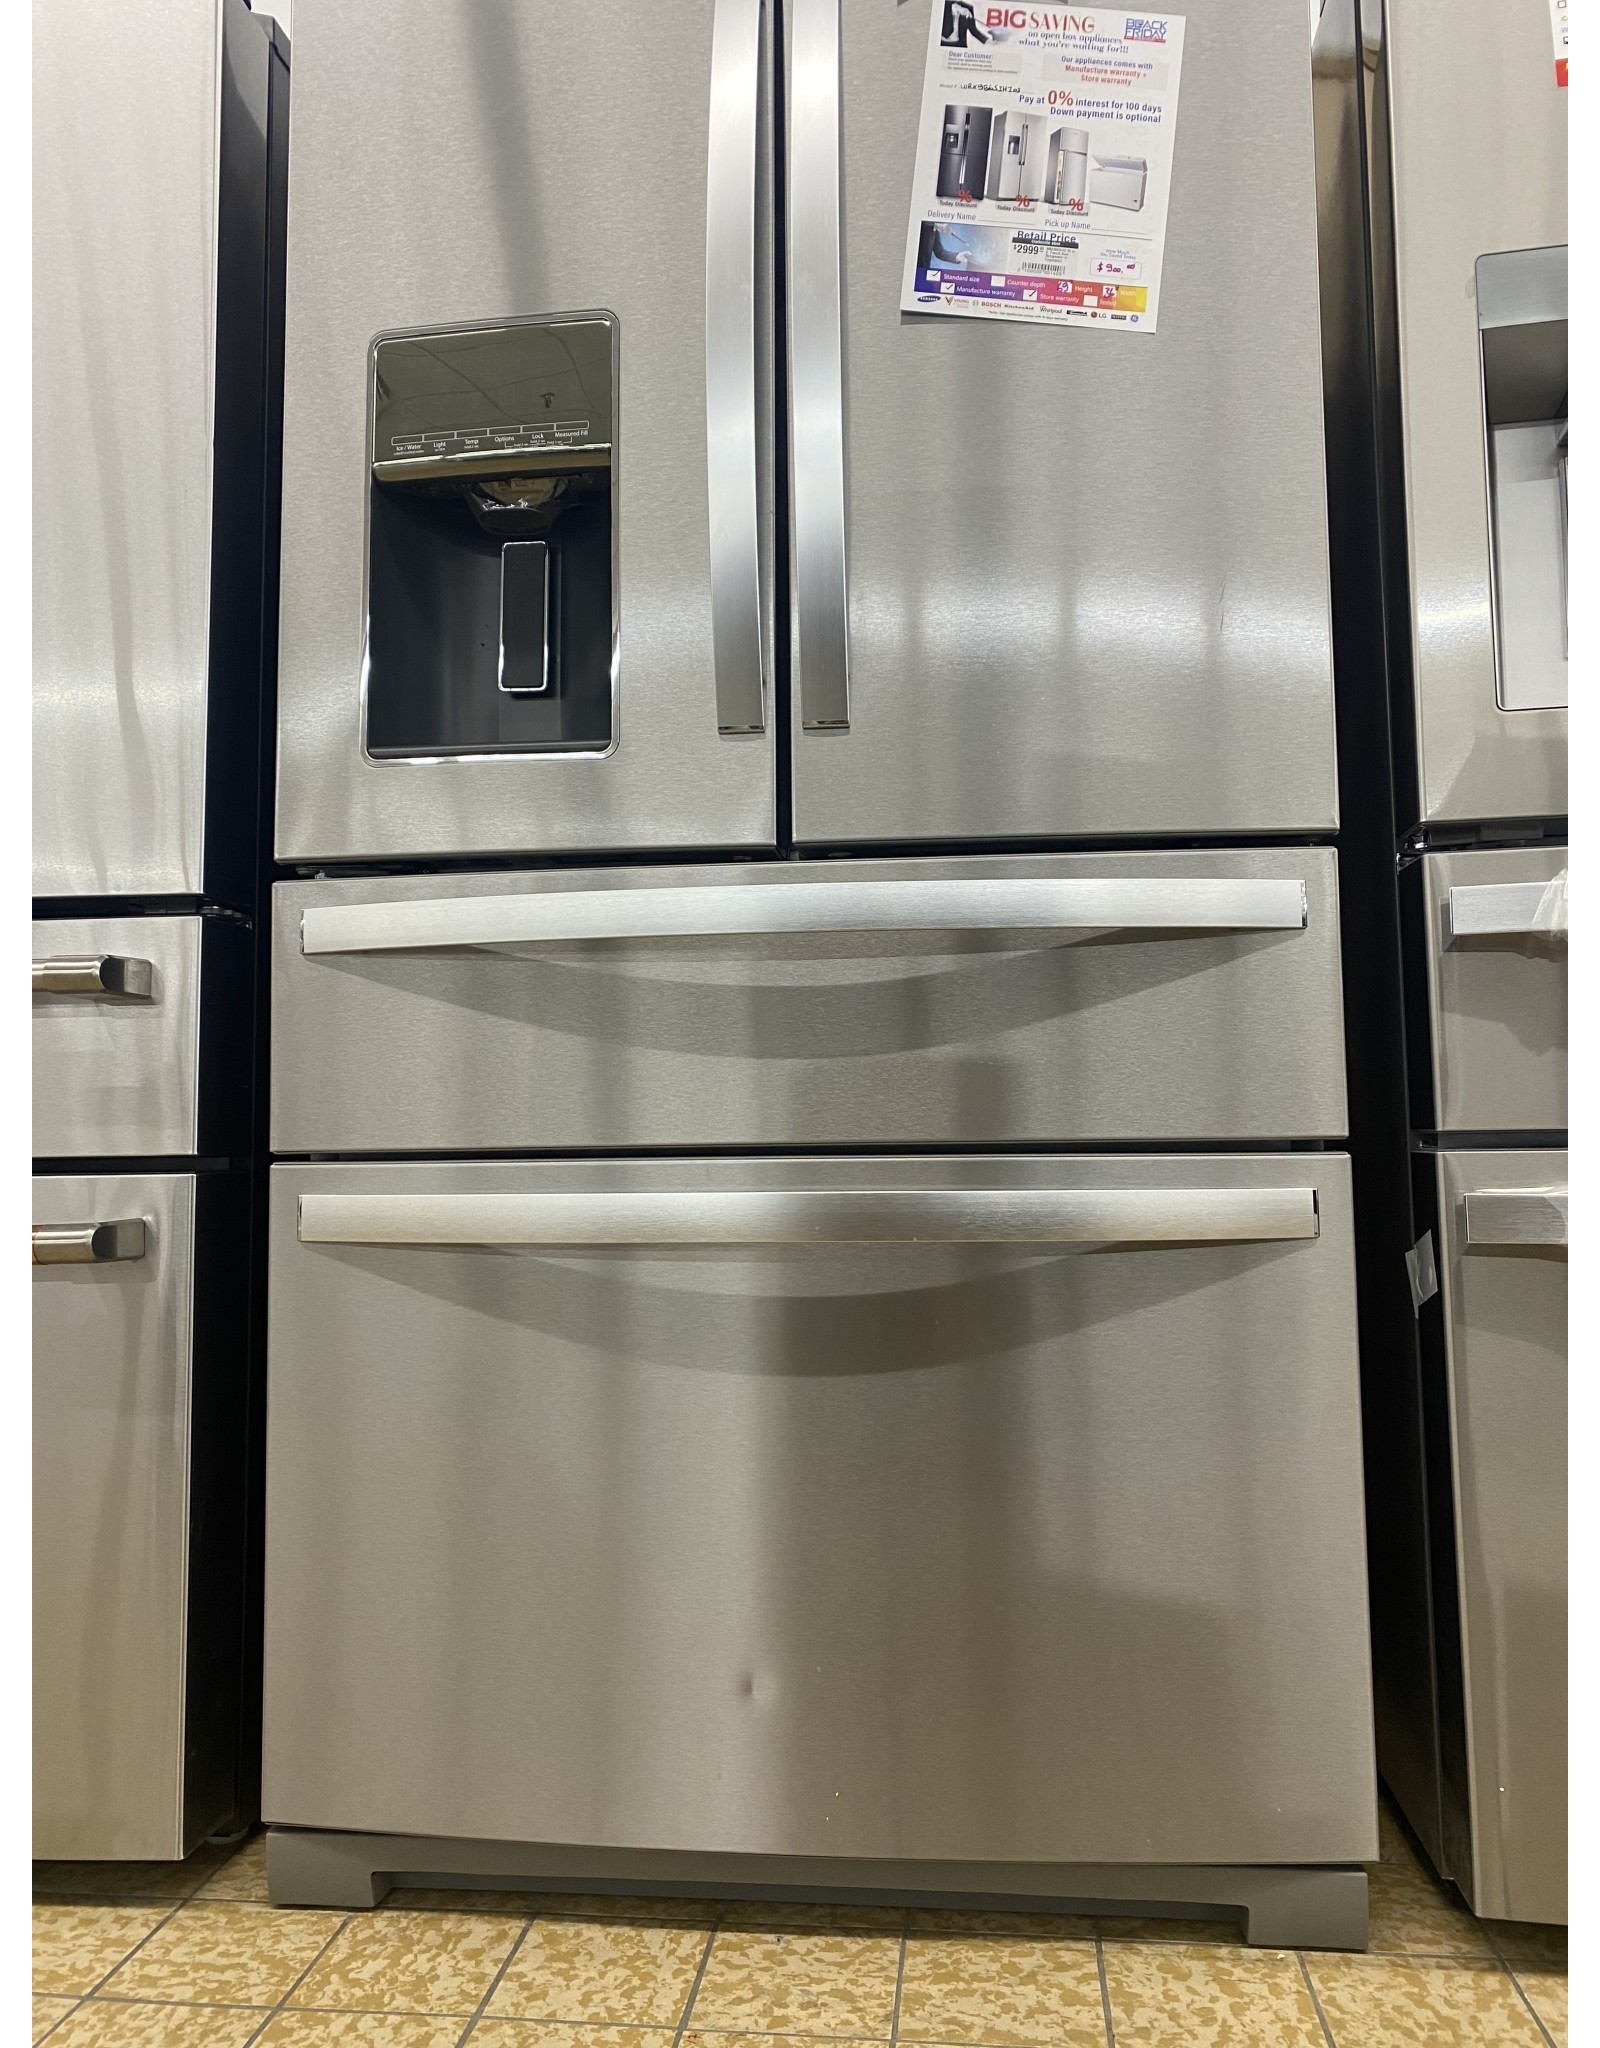 WHIRLPOOL WRX986SIHZ 26 cu. ft. French Door Refrigerator in Fingerprint Resistant Stainless Steel